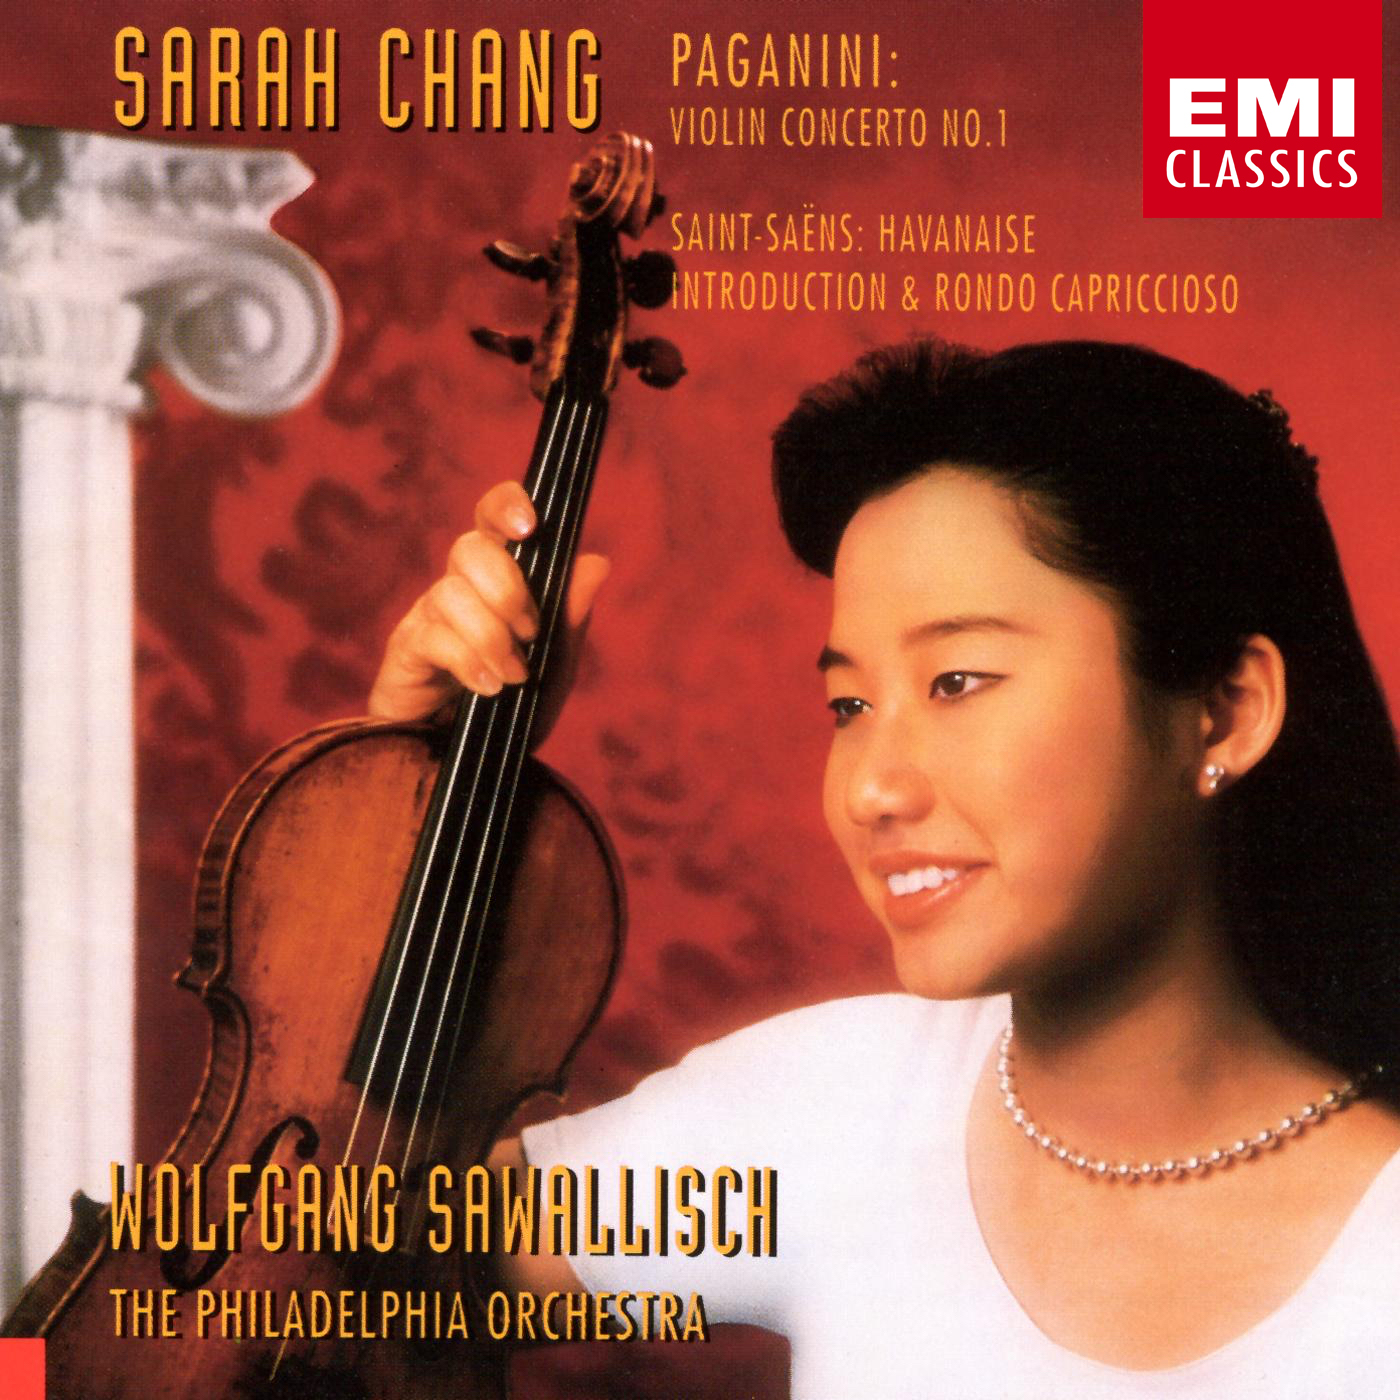 Paganini: Violin Concerto No. 1  SaintSa ns: Havanaise